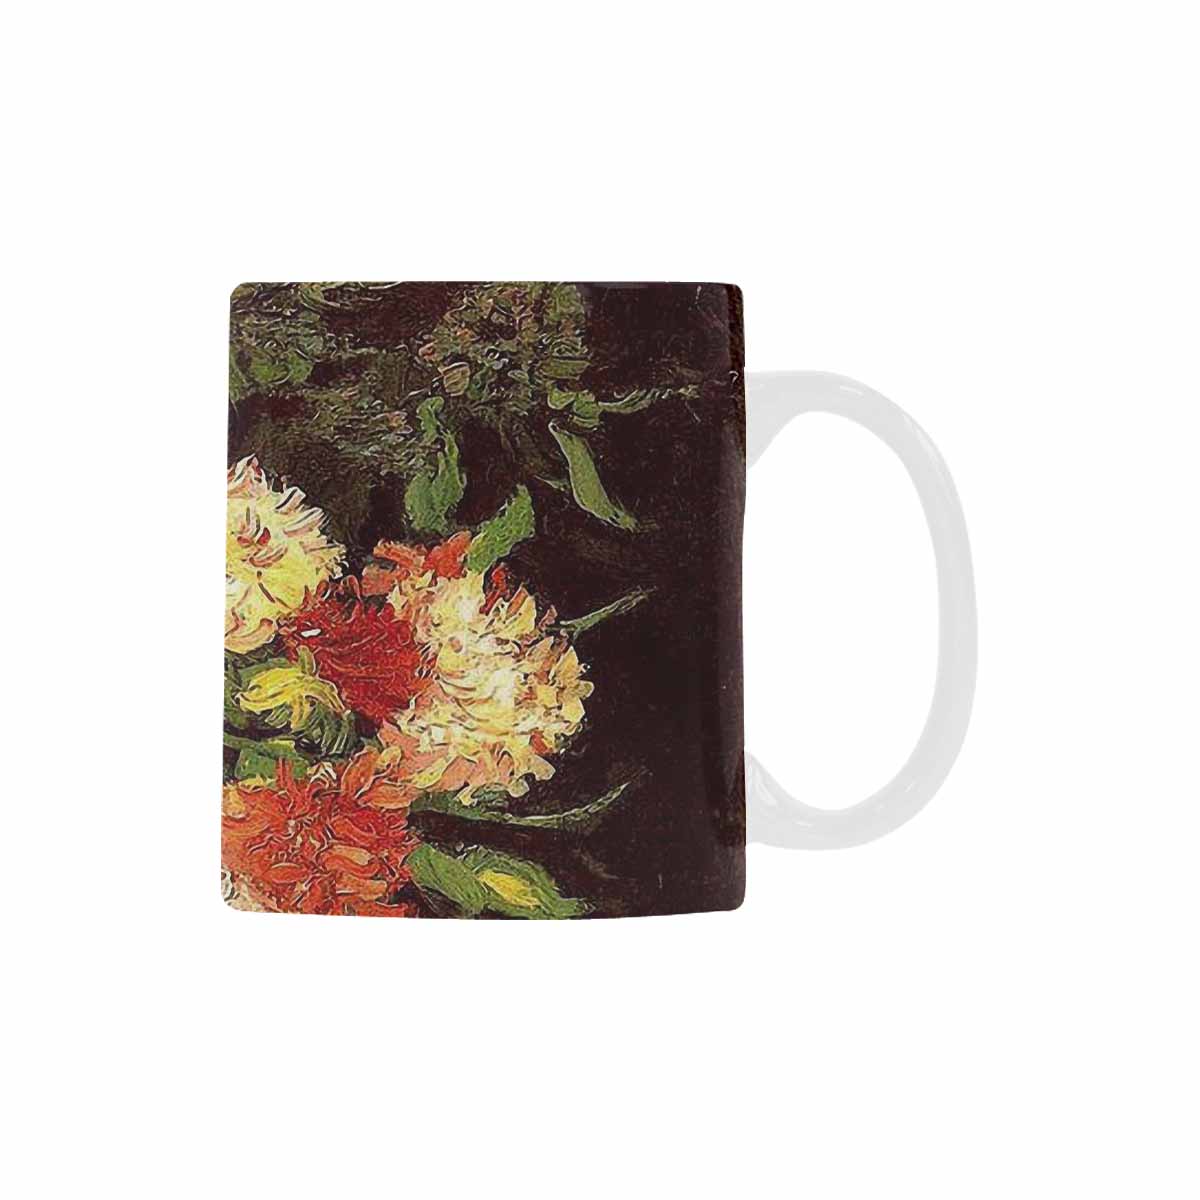 Vintage floral coffee mug or tea cup, Design 33